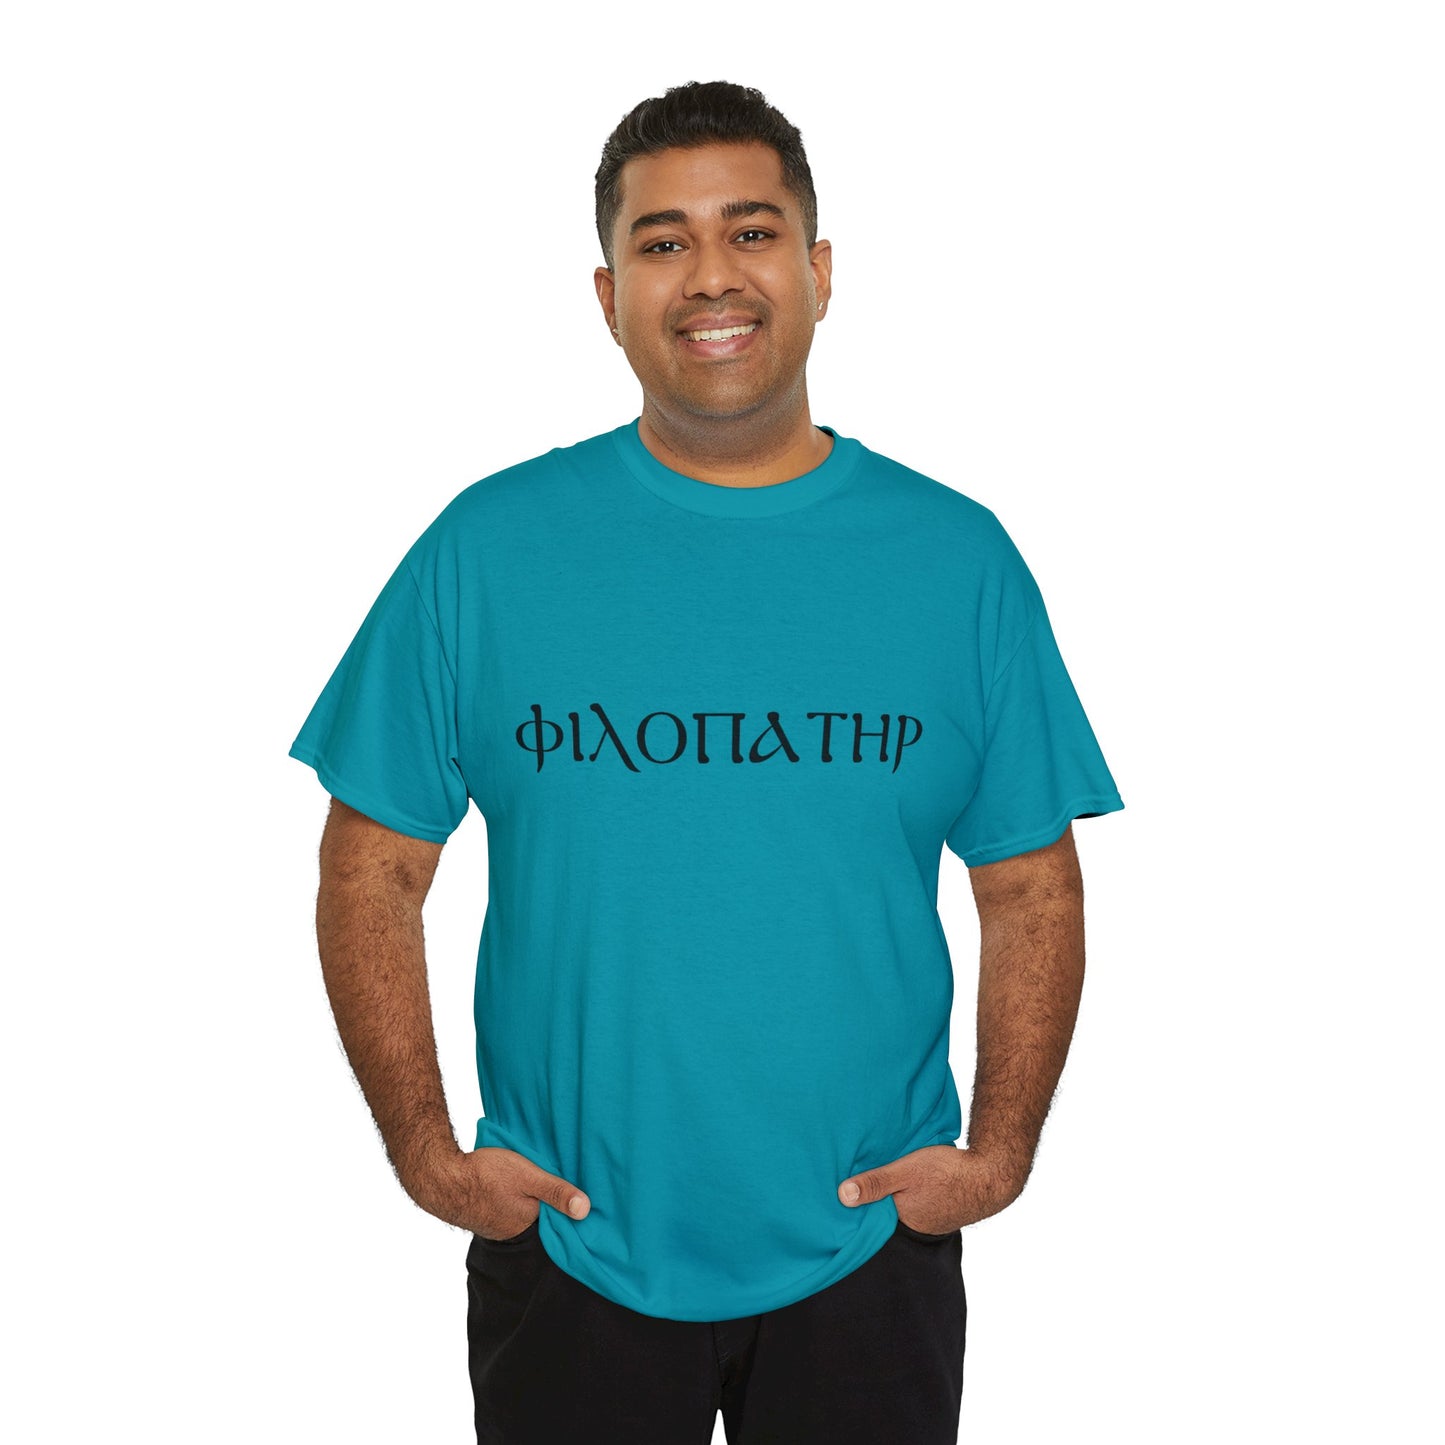 Philopateer T-shirt